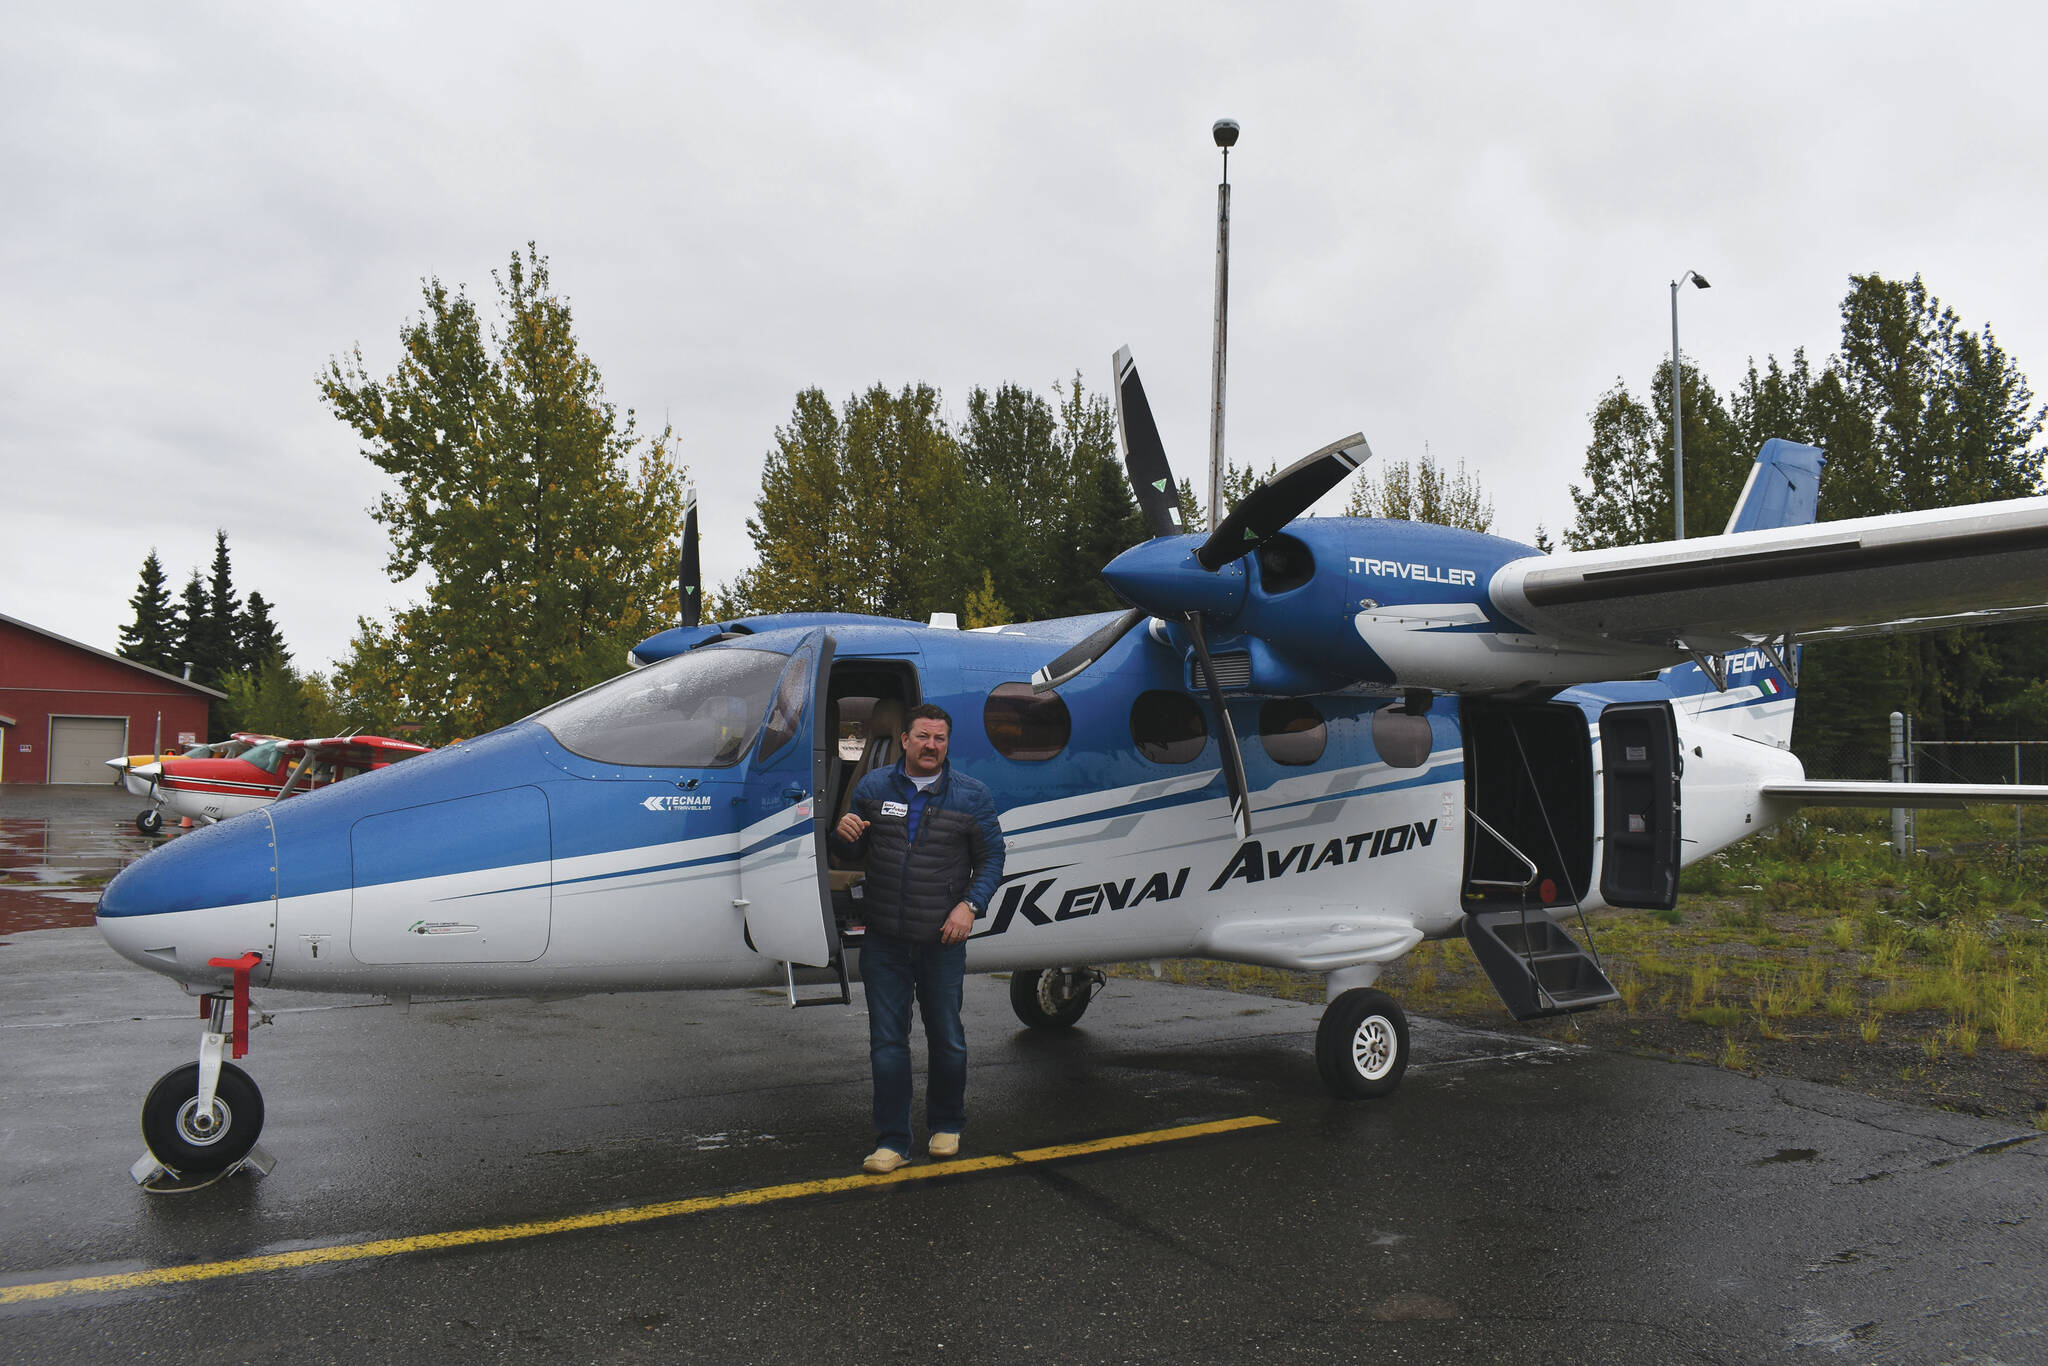 Joel Caldwell shows off the new Tecnam Traveller on Thursday, Sept. 15, 2022 in Kenai, Alaska. (Jake Dye/Peninsula Clarion)